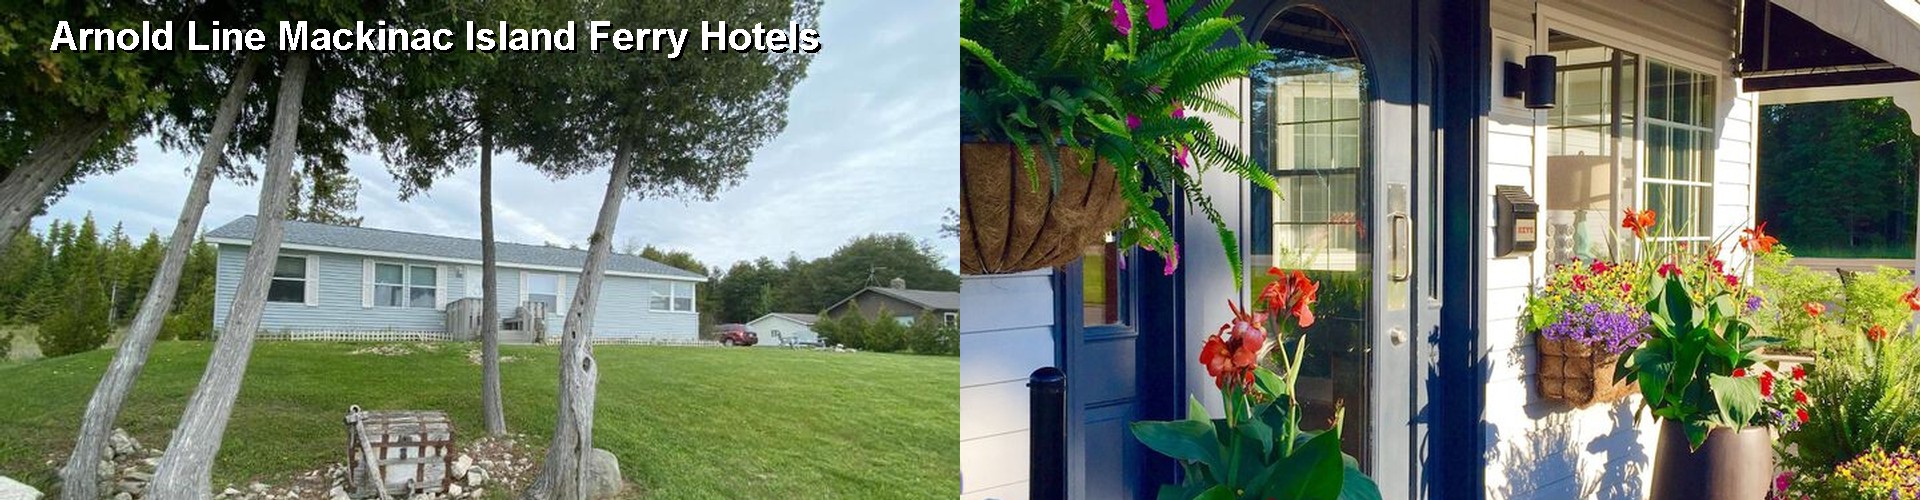 3 Best Hotels near Arnold Line Mackinac Island Ferry